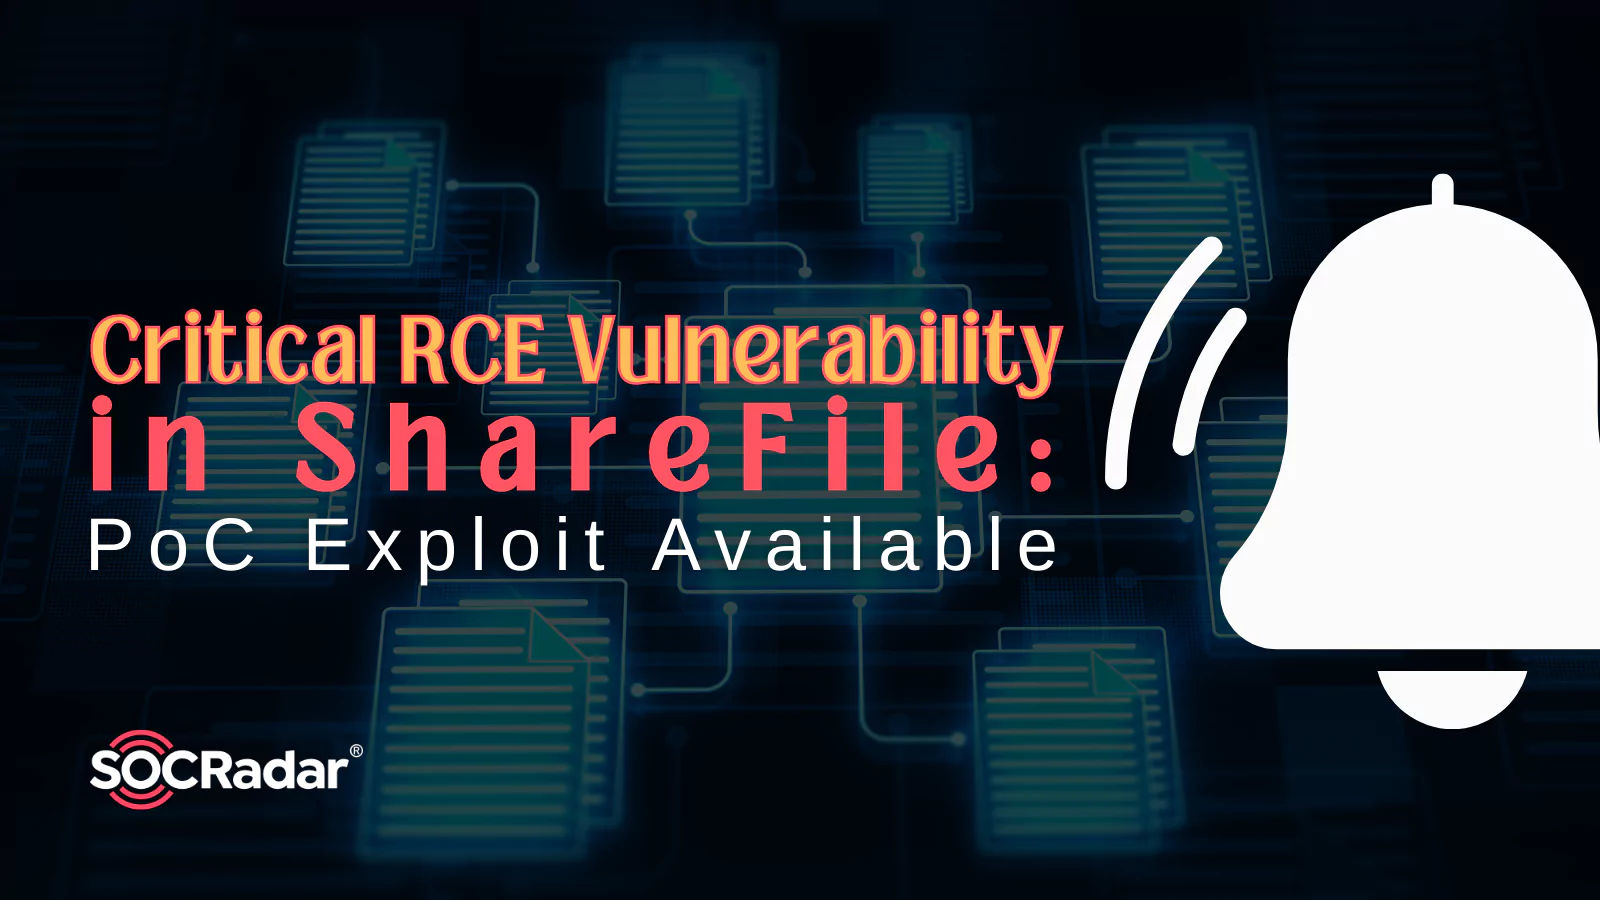 SOCRadar® Cyber Intelligence Inc. | Critical RCE Vulnerability in ShareFile: PoC Exploit Available